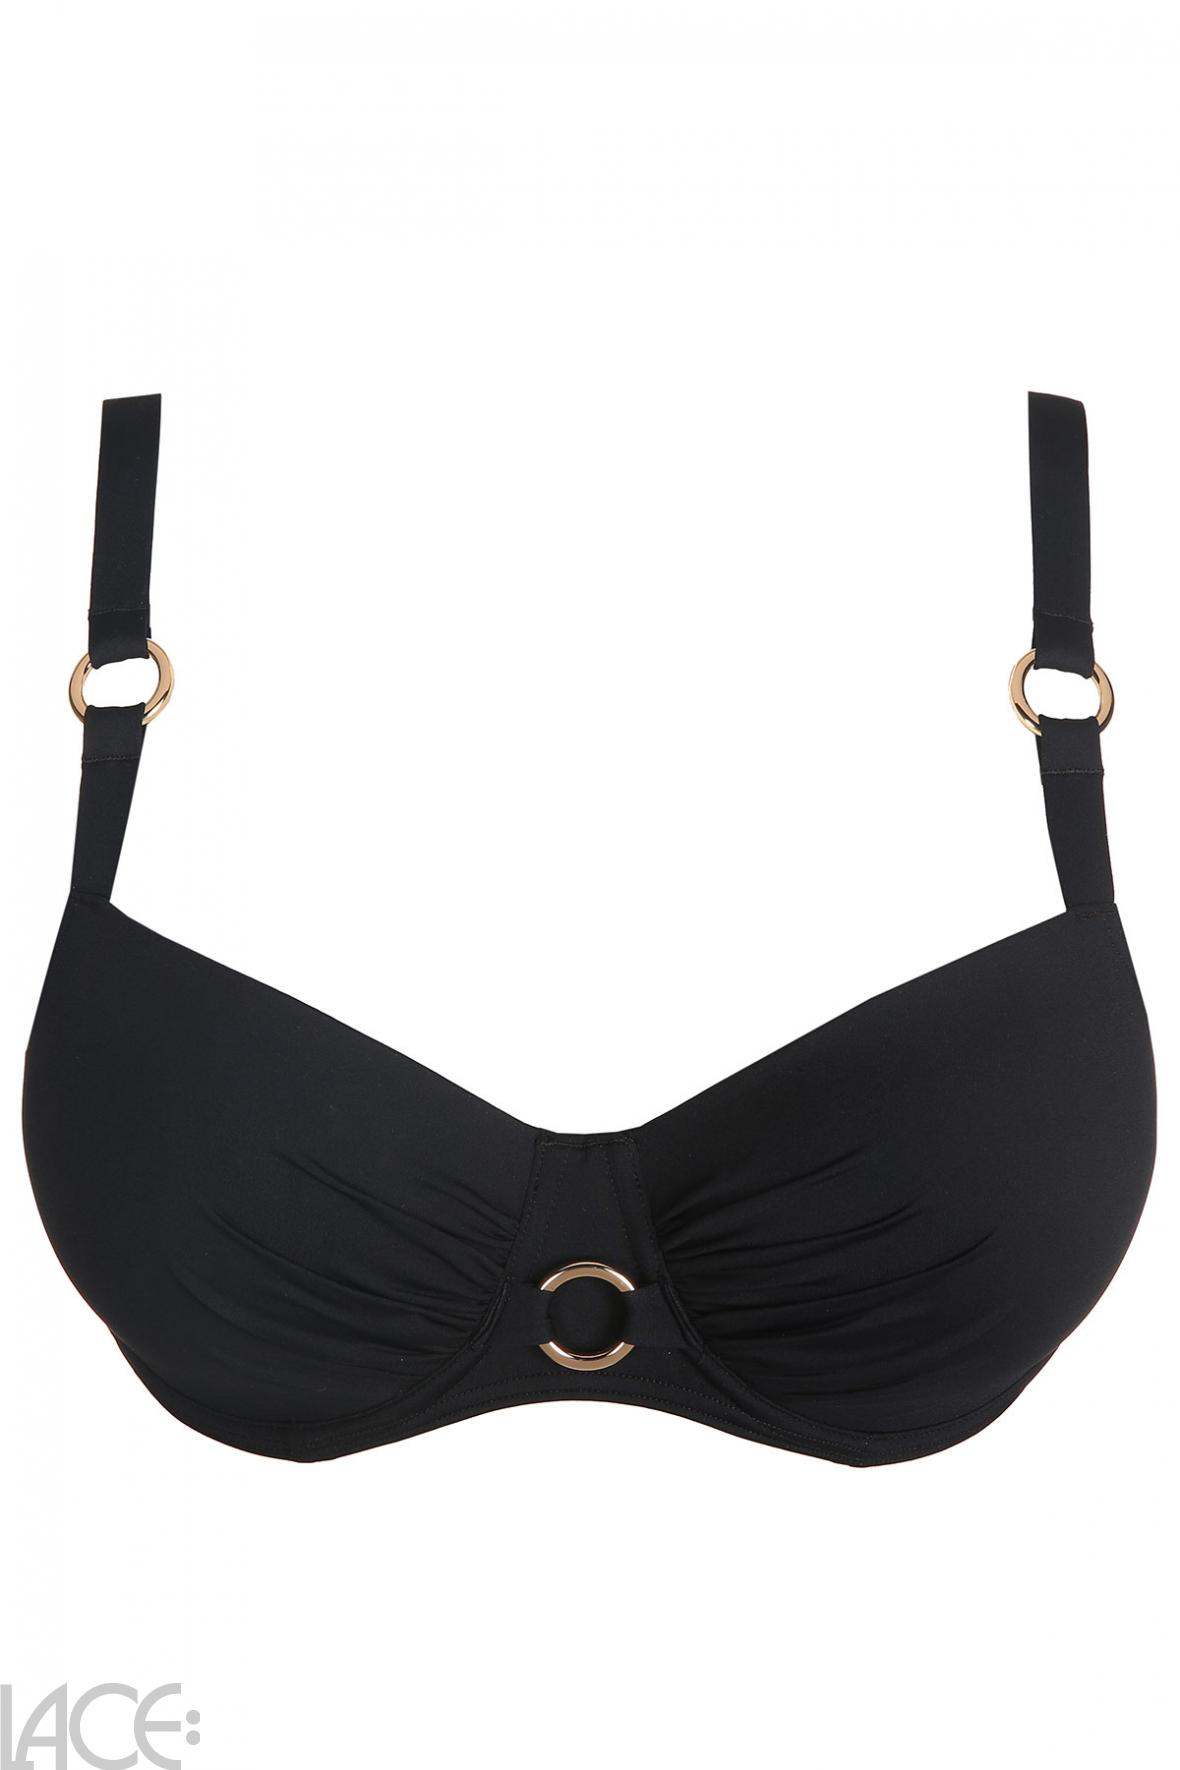 PrimaDonna Swim DAMIETTA black padded strapless bikini top